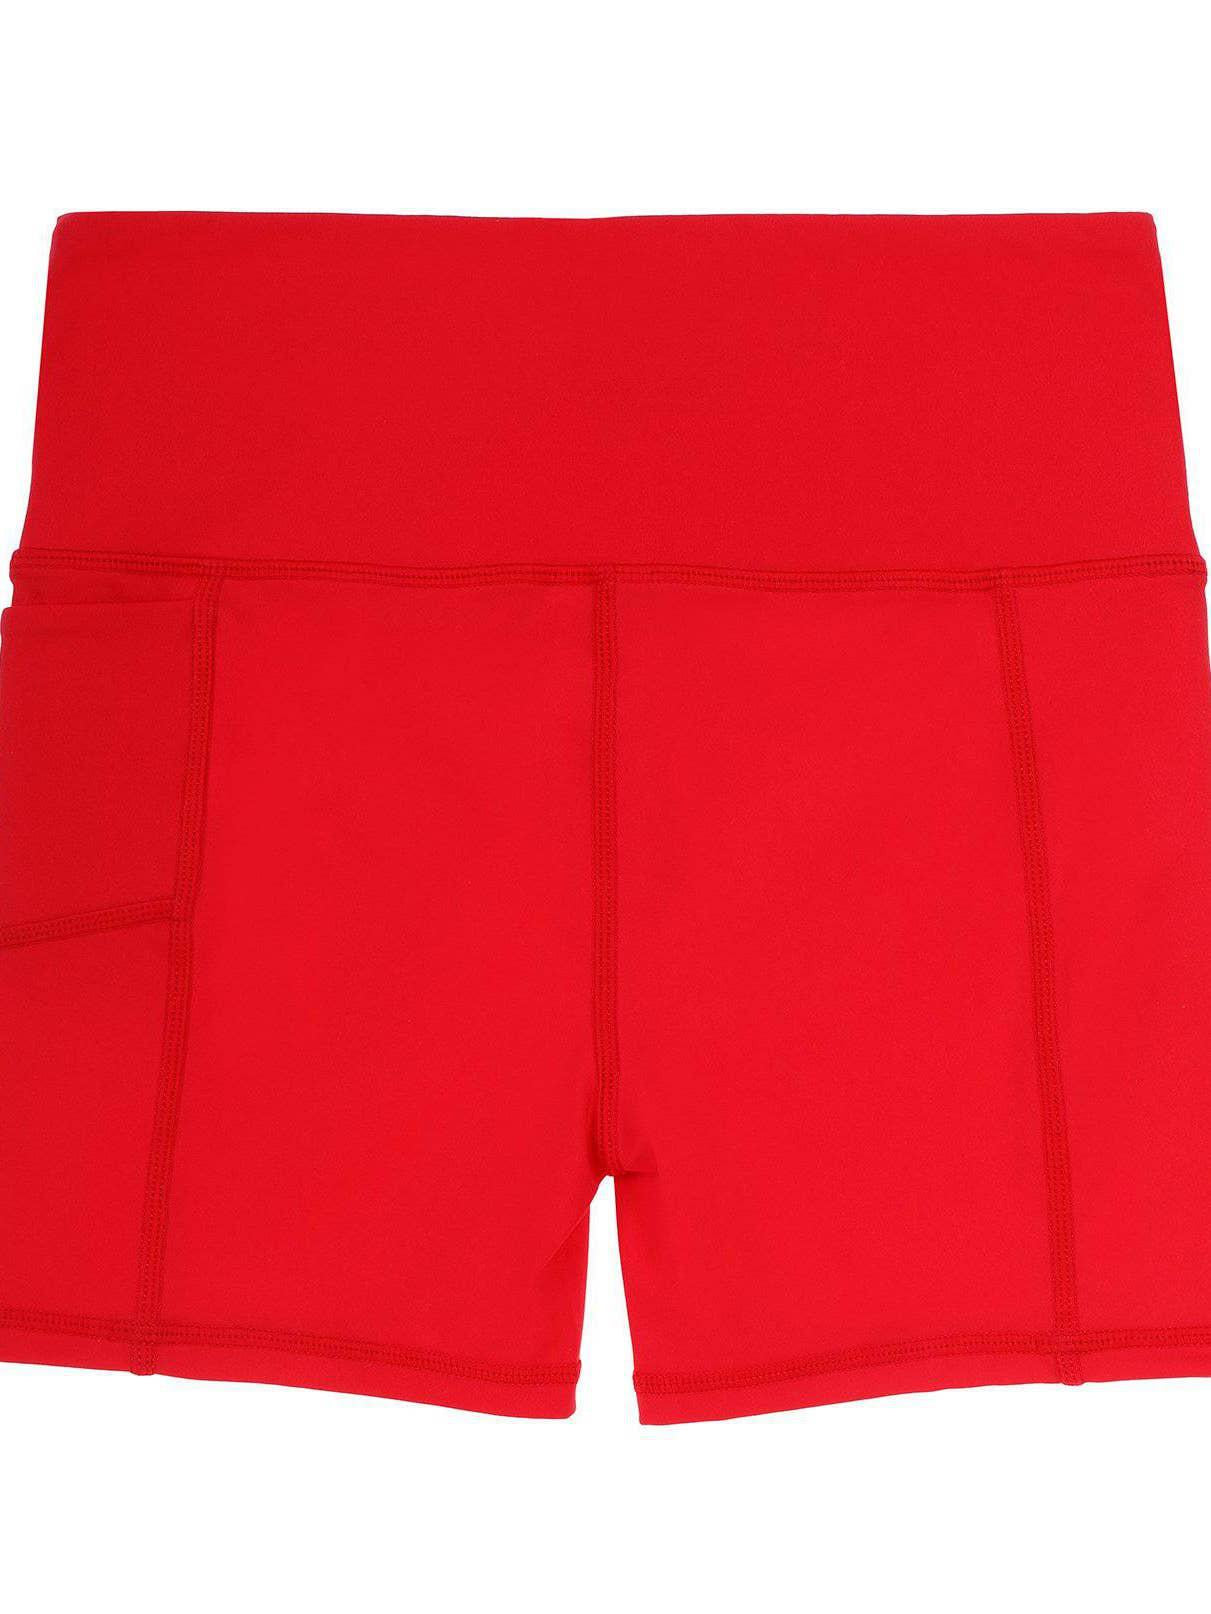 SAS Sports Shorts